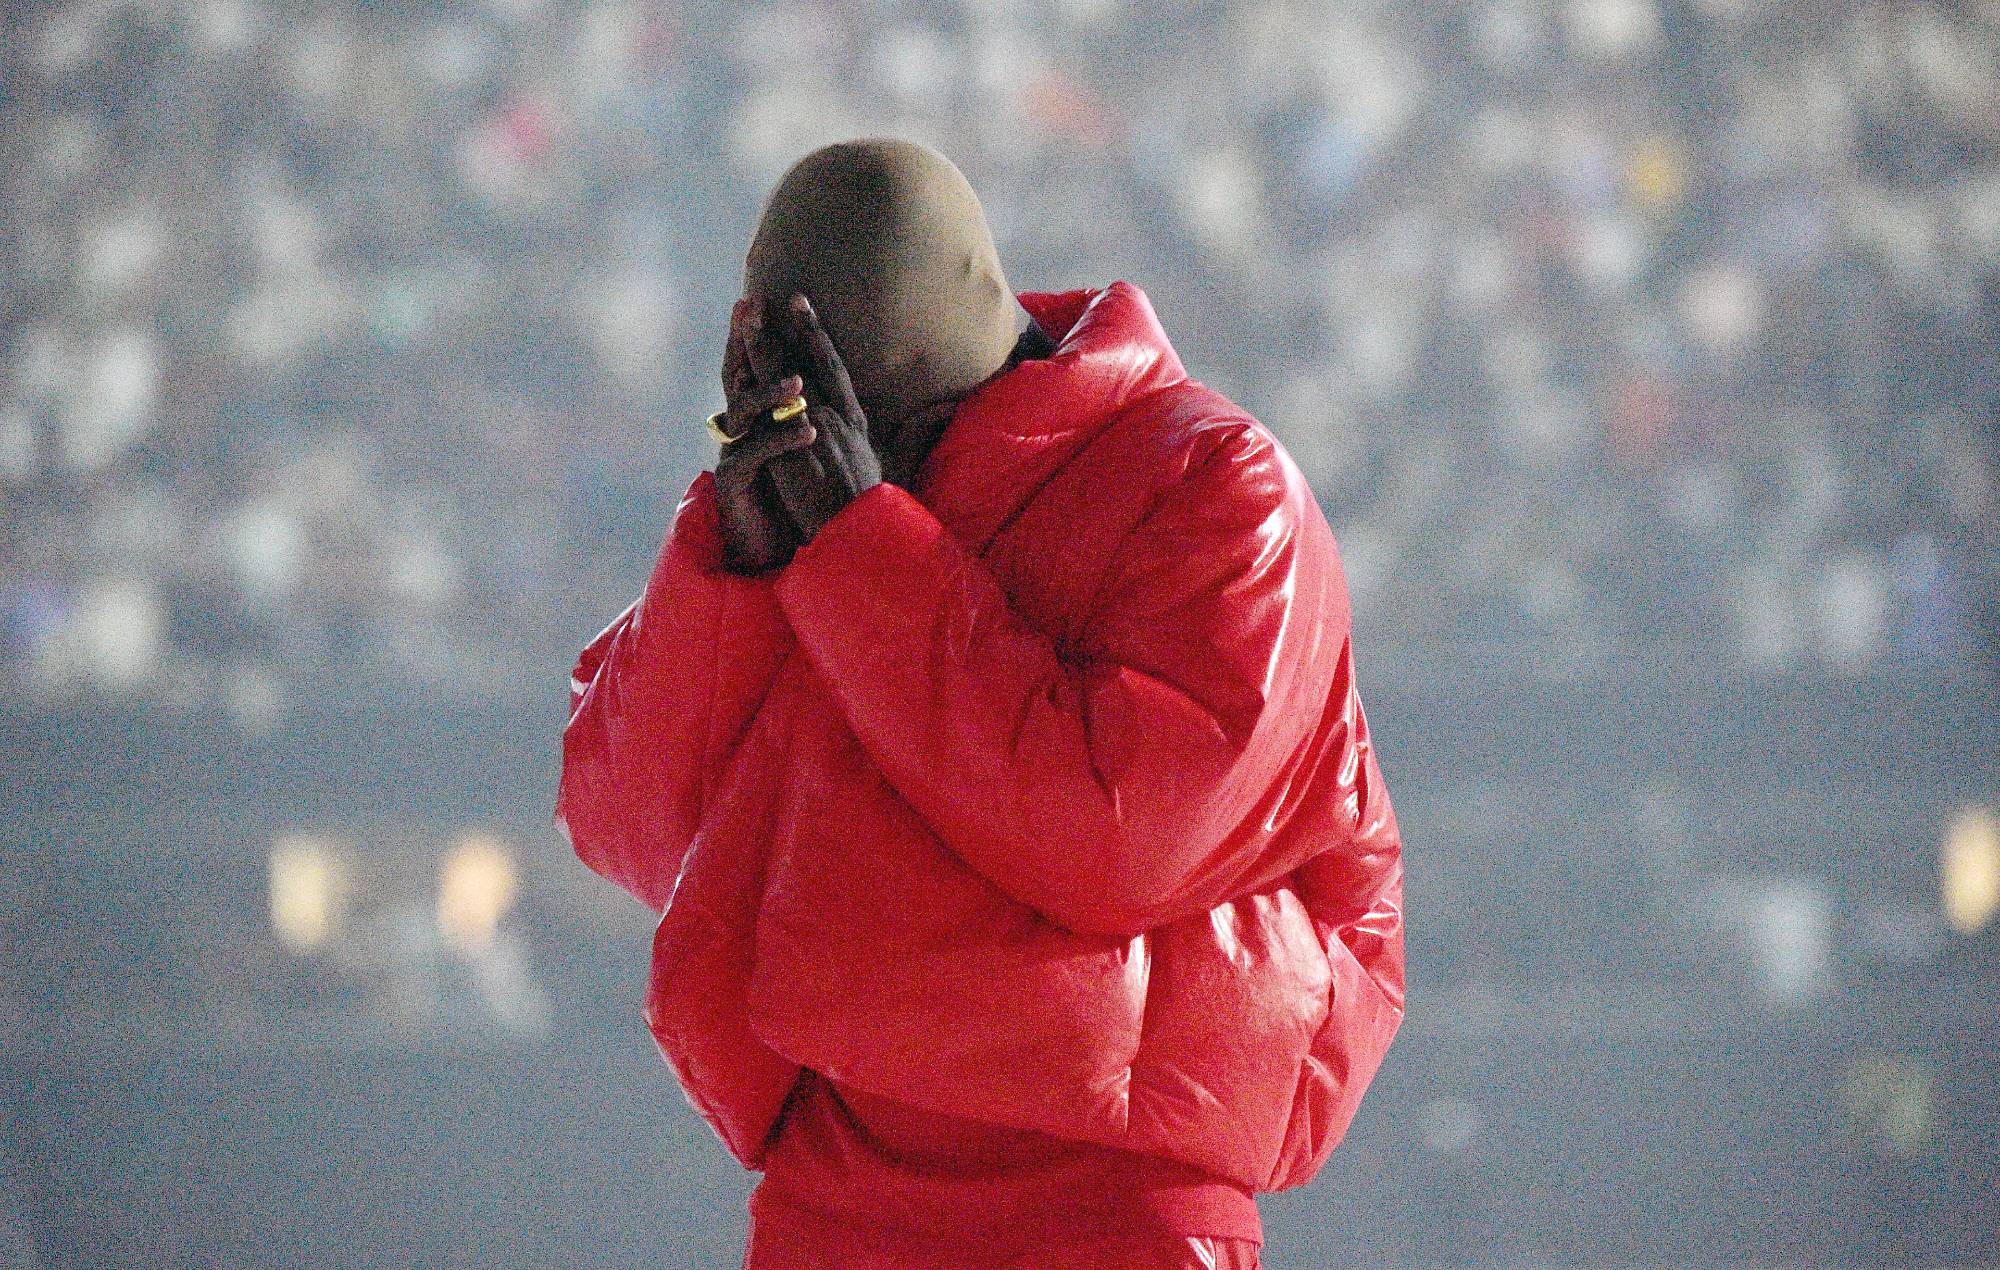 Kanye West begins DONDA livestream on Apple Music